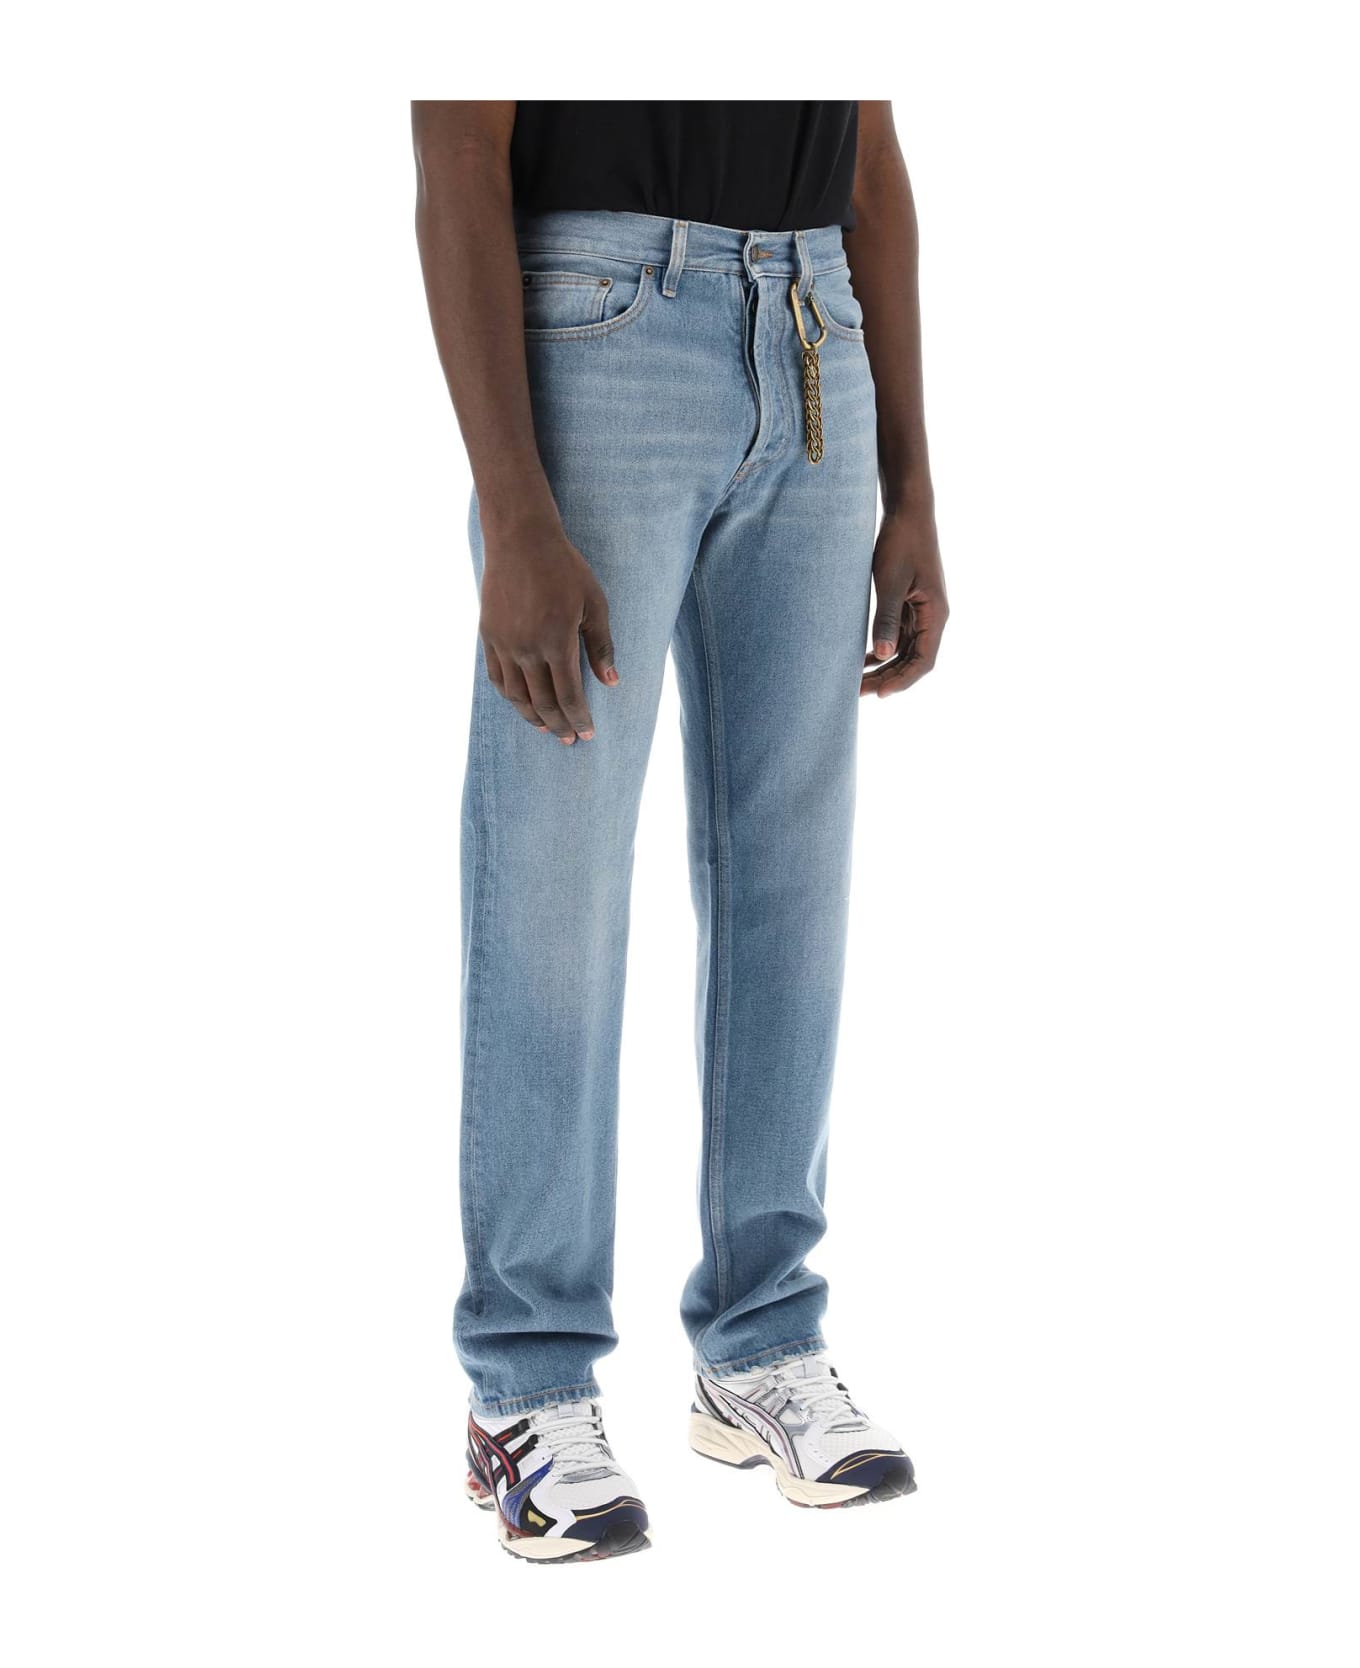 DARKPARK Larry Straight Cut Jeans - BLUE